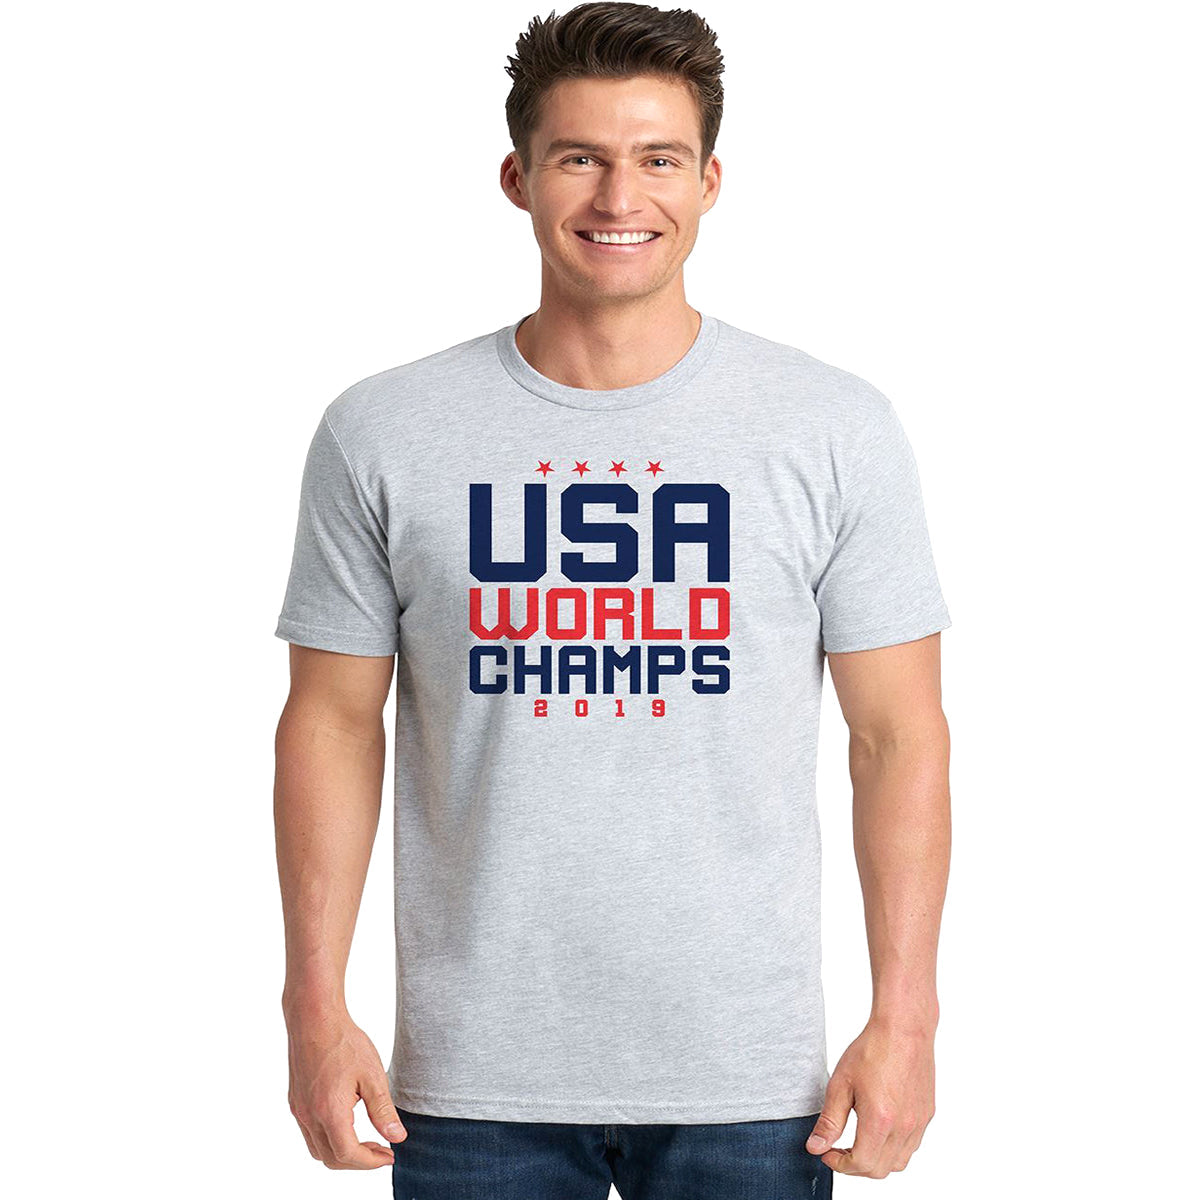 USA World Champions Shirt T-shirts 411 Youth Medium Ash Youth